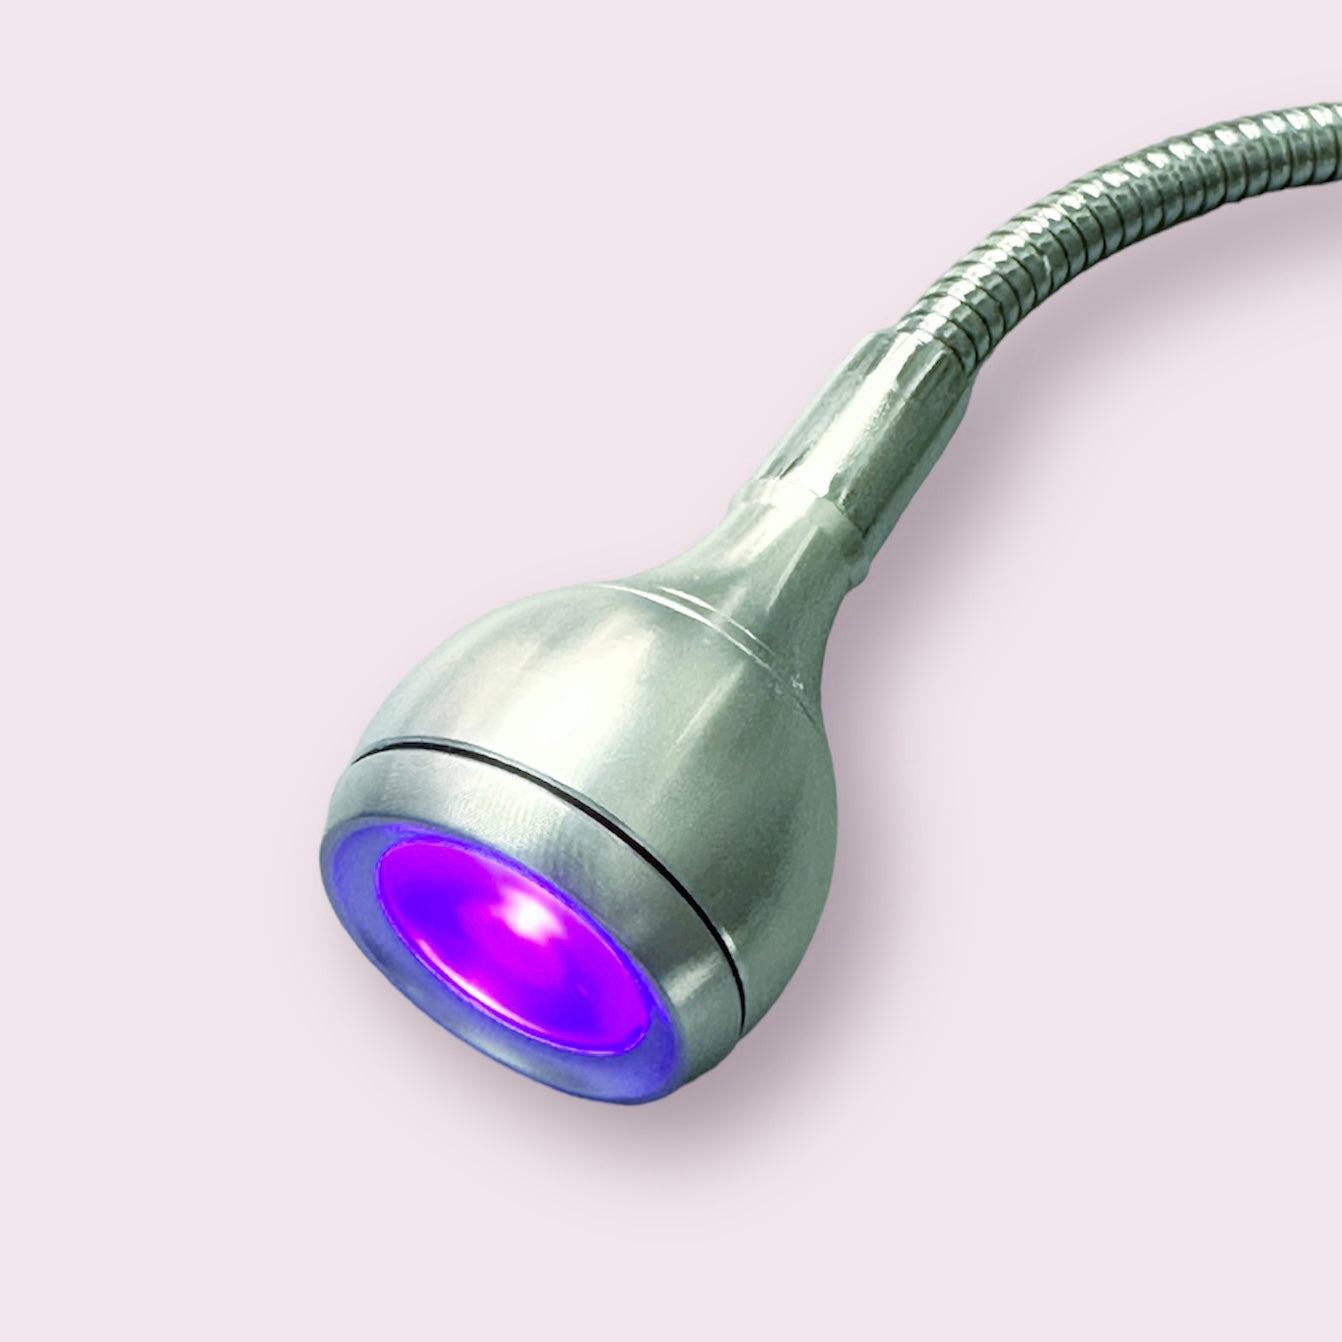 Mini UV-lamp (USB) for nails